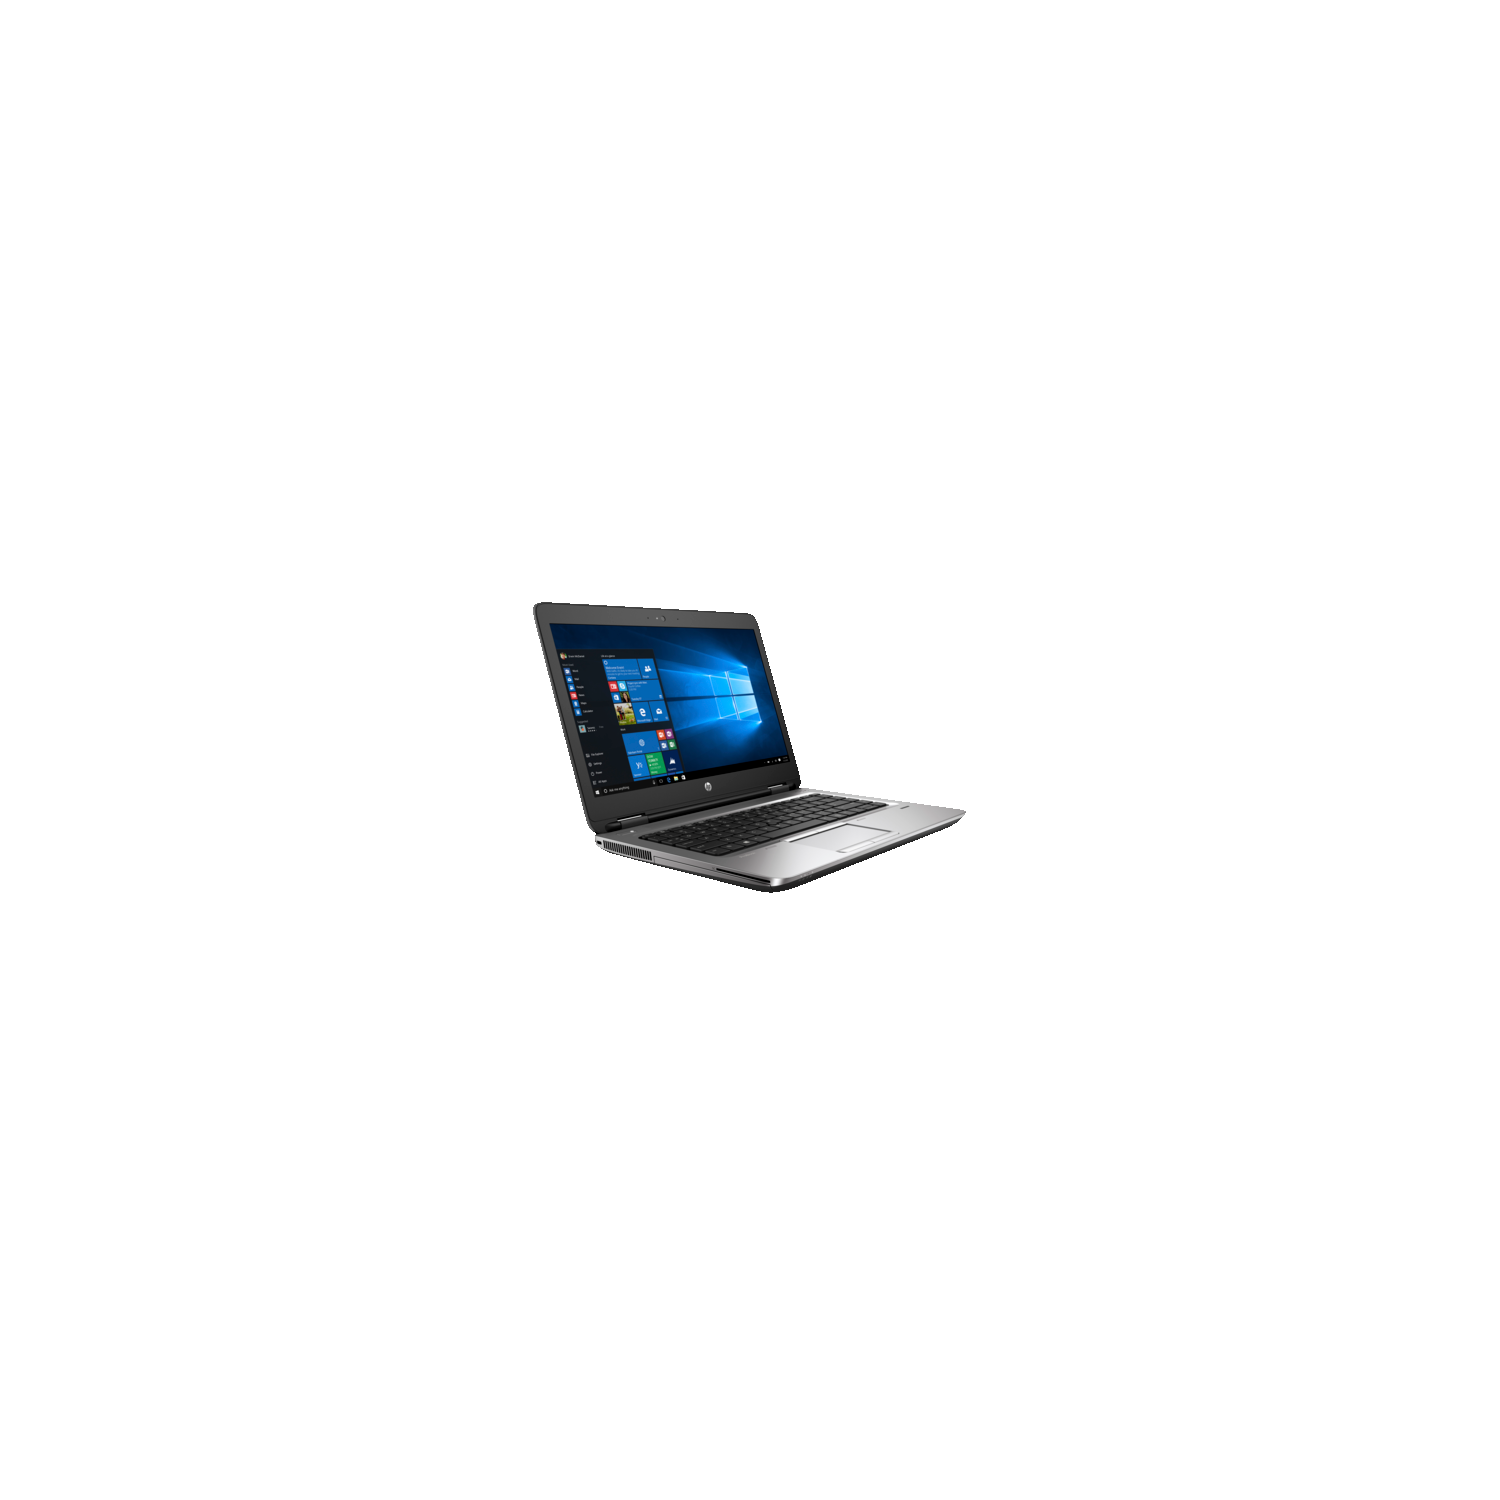 HP ProBook 640 G2 14in Laptop (Intel Core i5 / 500GB / 4GB RAM / Windows 10 Pro 64-bit) - V1P72UT#ABA